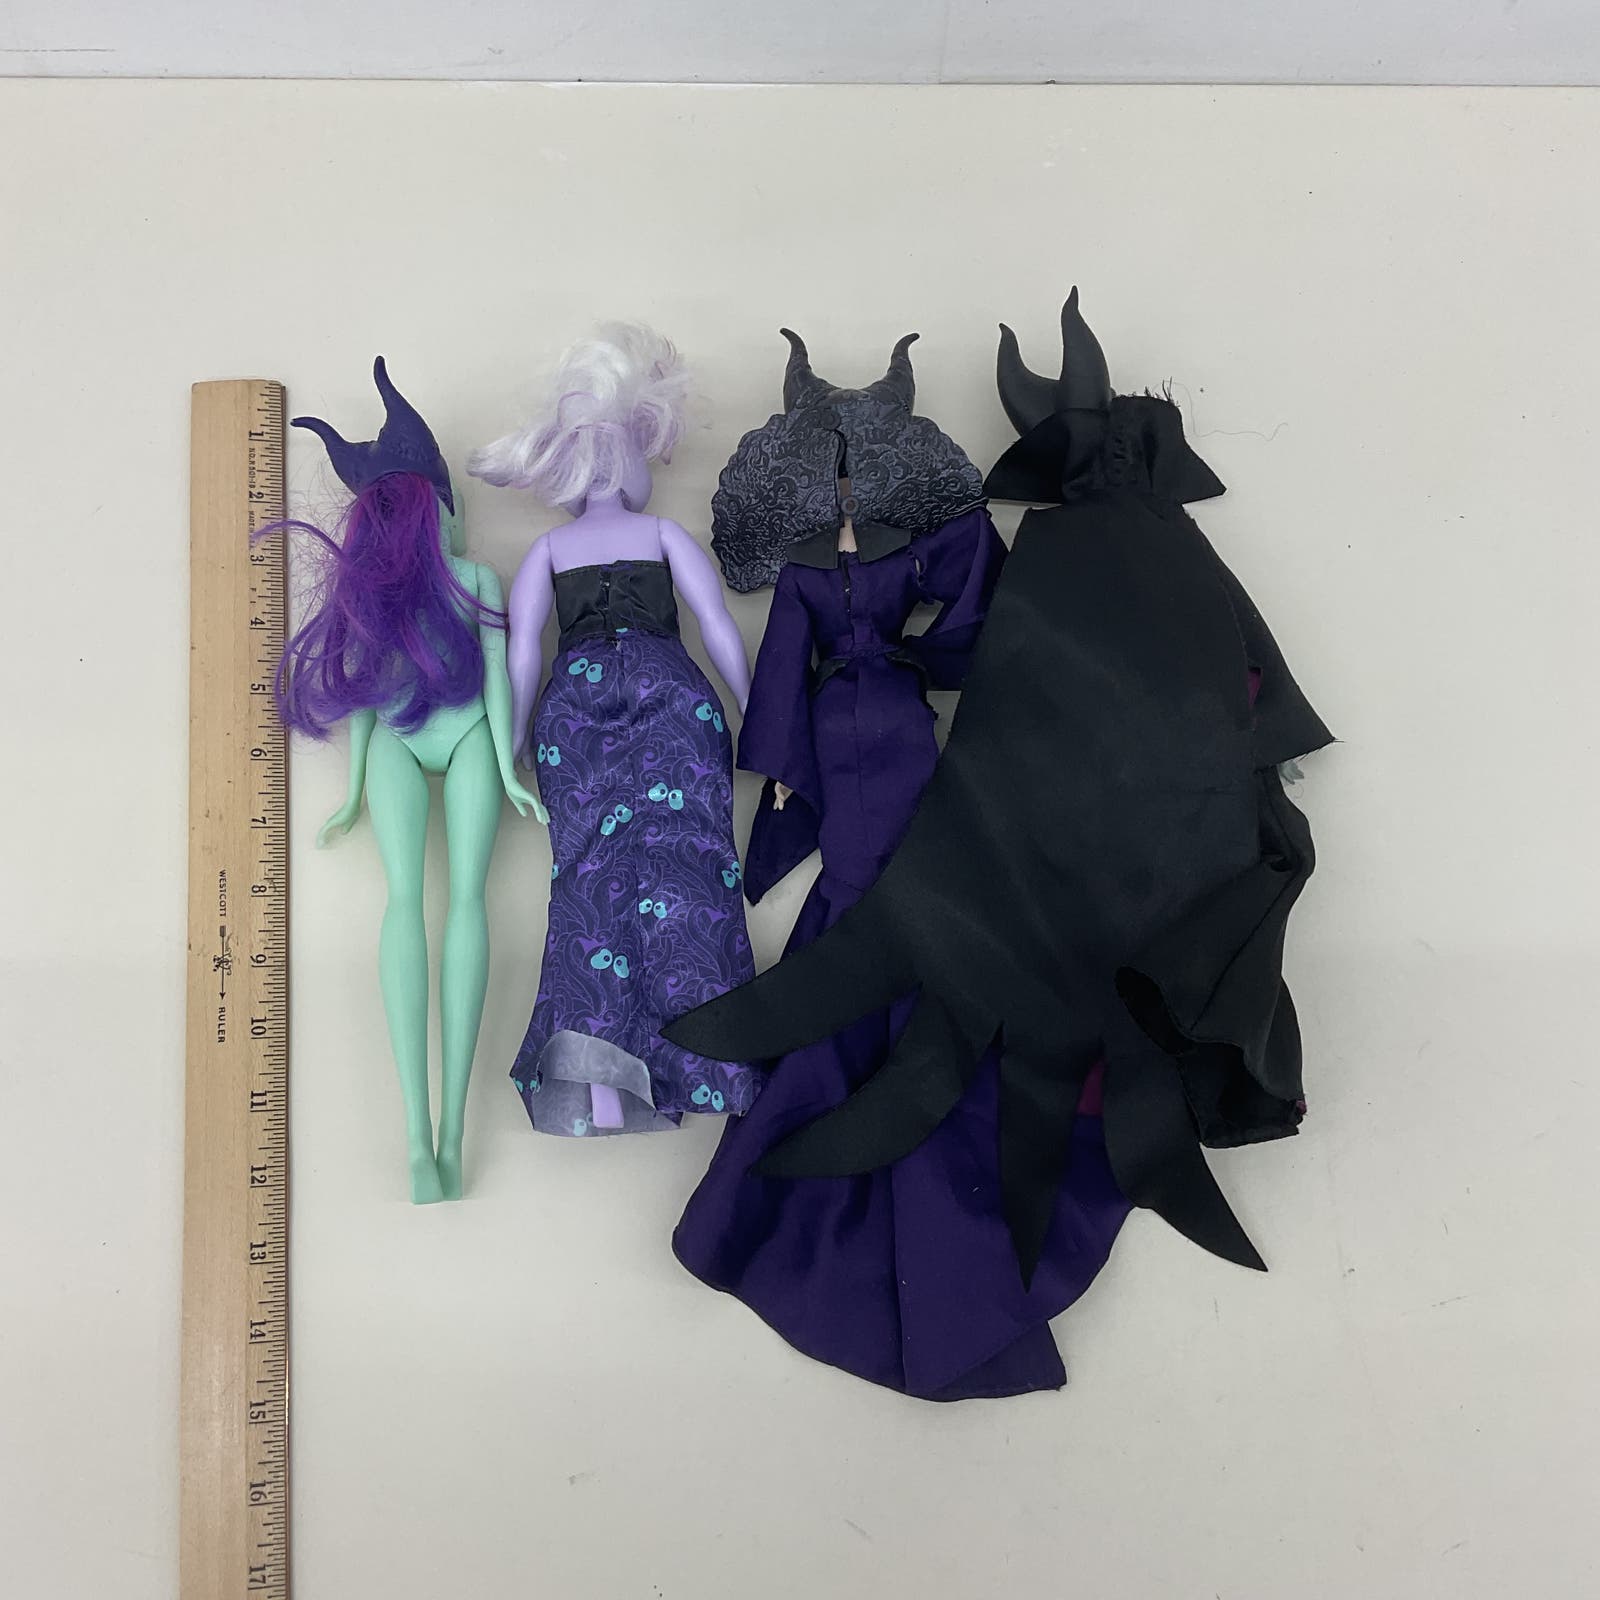 Disney Villains Loose Fashion Doll LOT Ursula Maleficent Sleeping Beauty Mermaid - Warehouse Toys